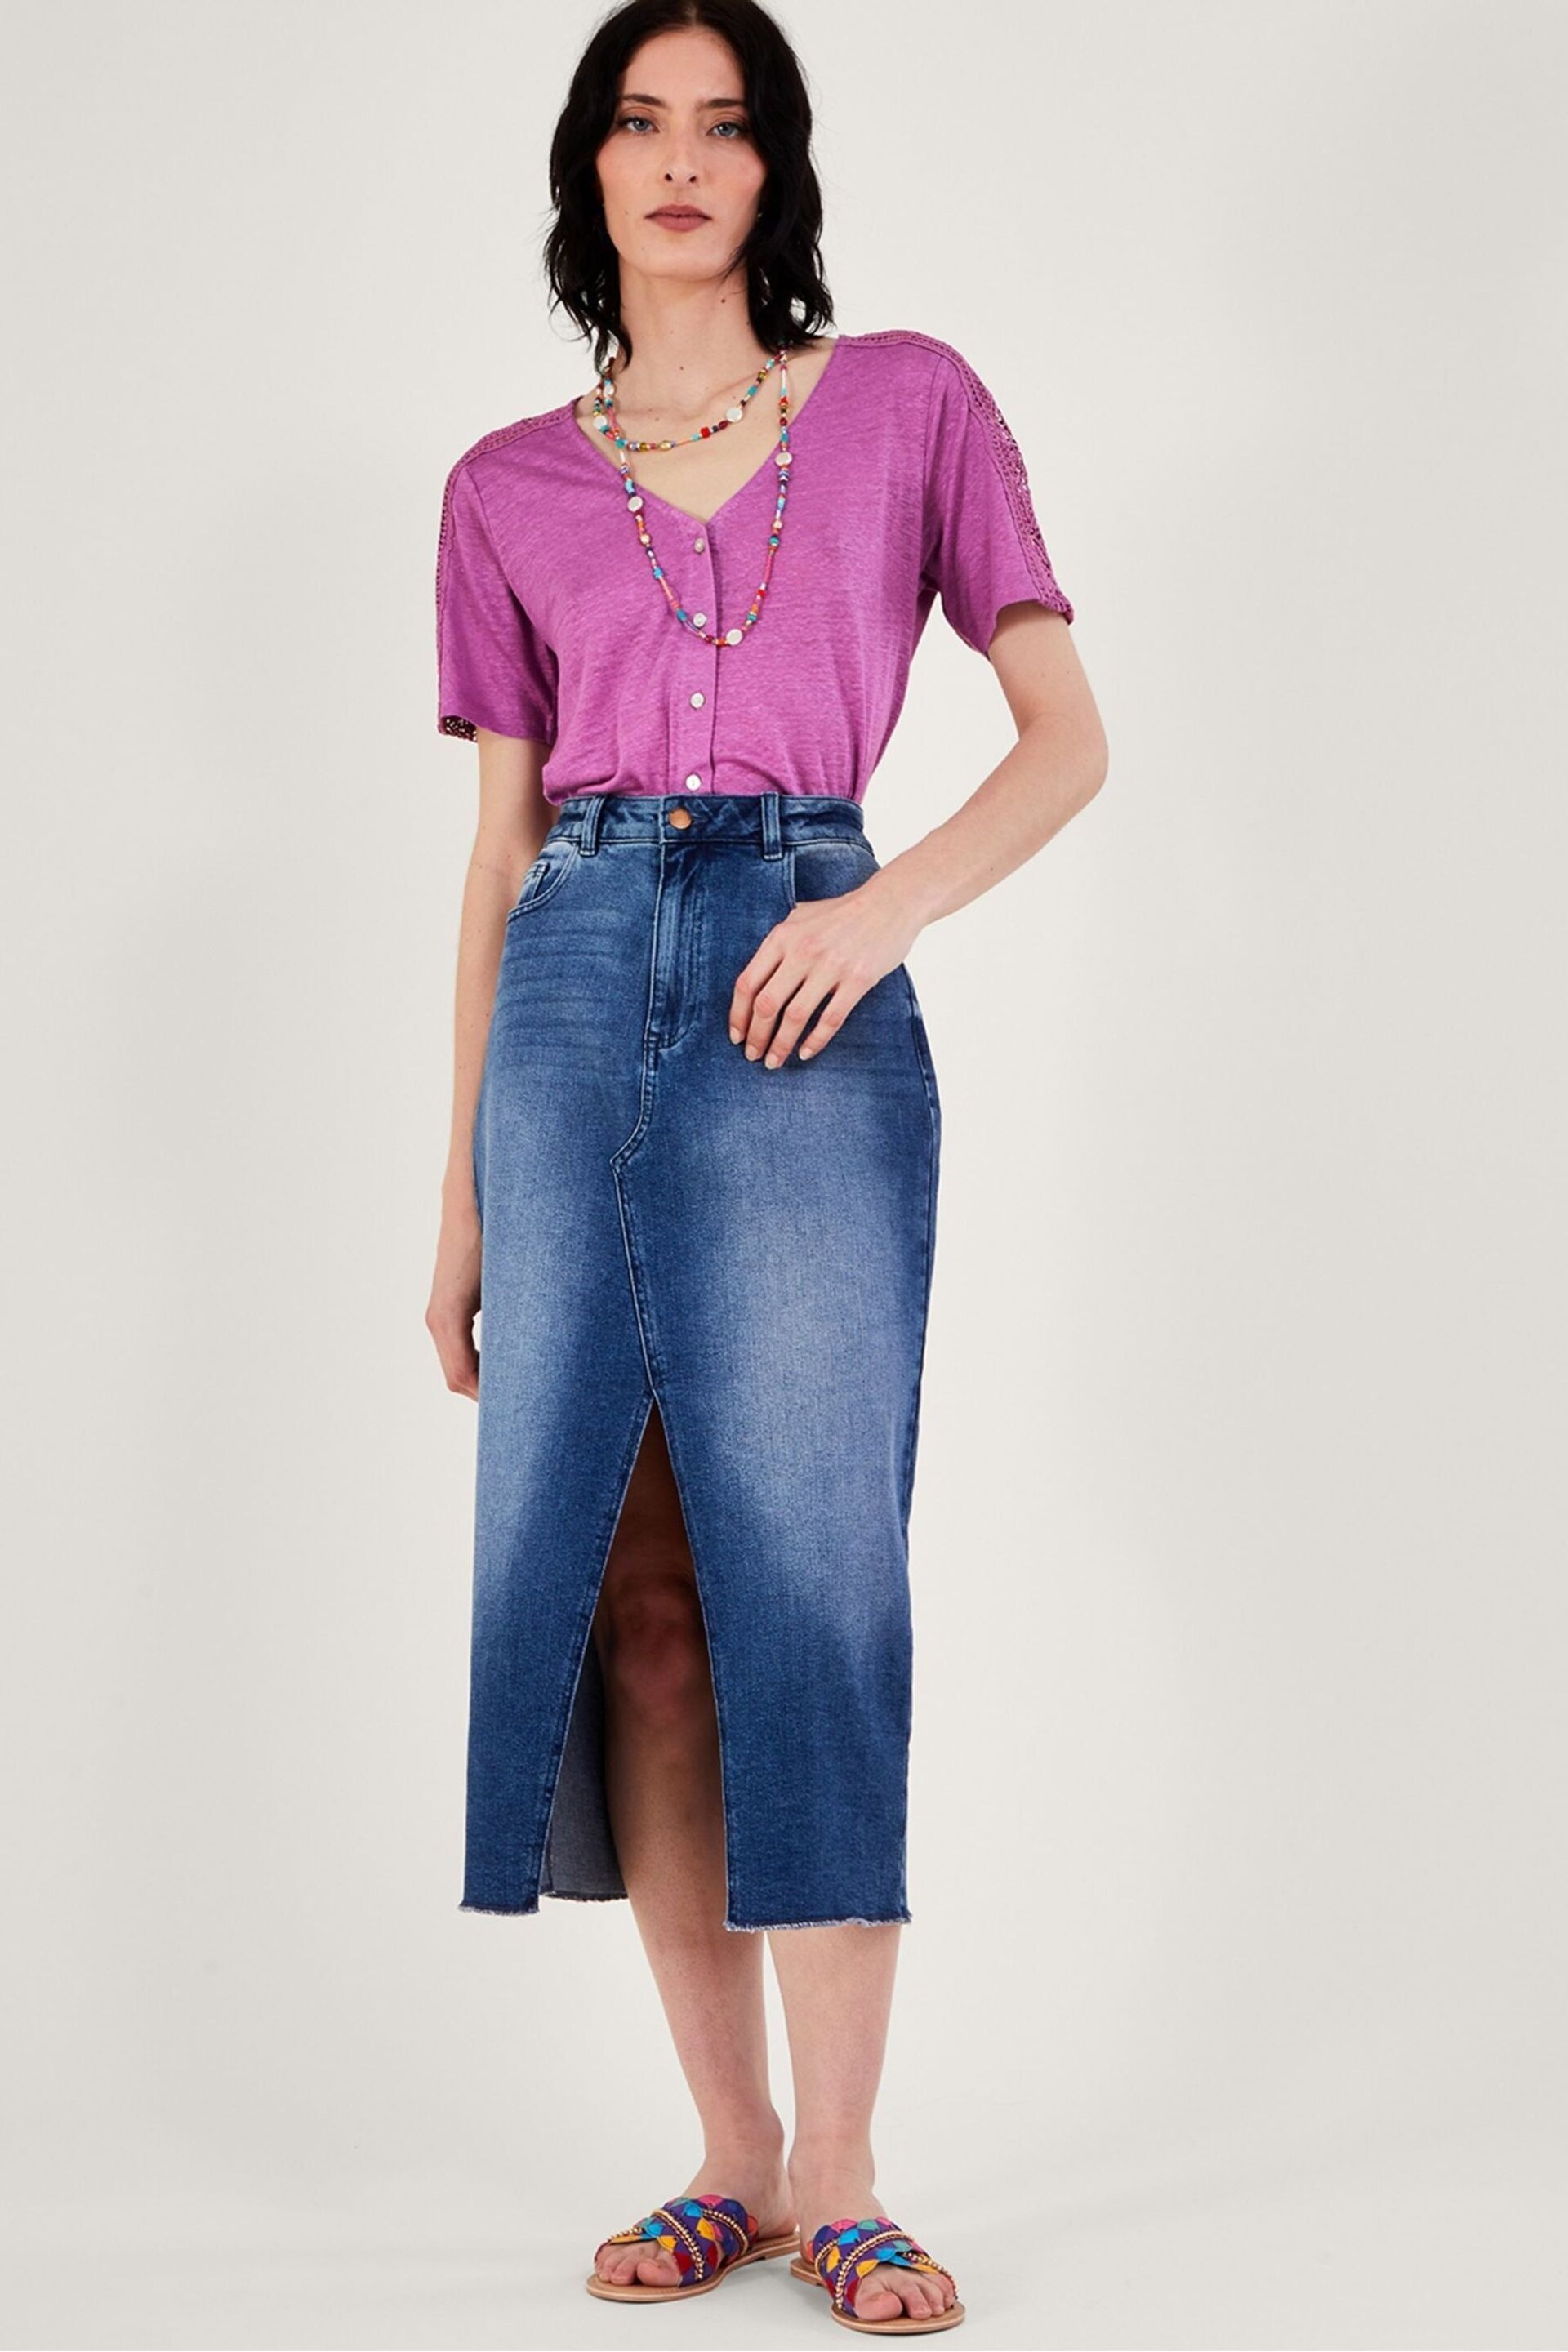 Monsoon Purple Button Through Lace Linen T-Shirt - Image 2 of 4